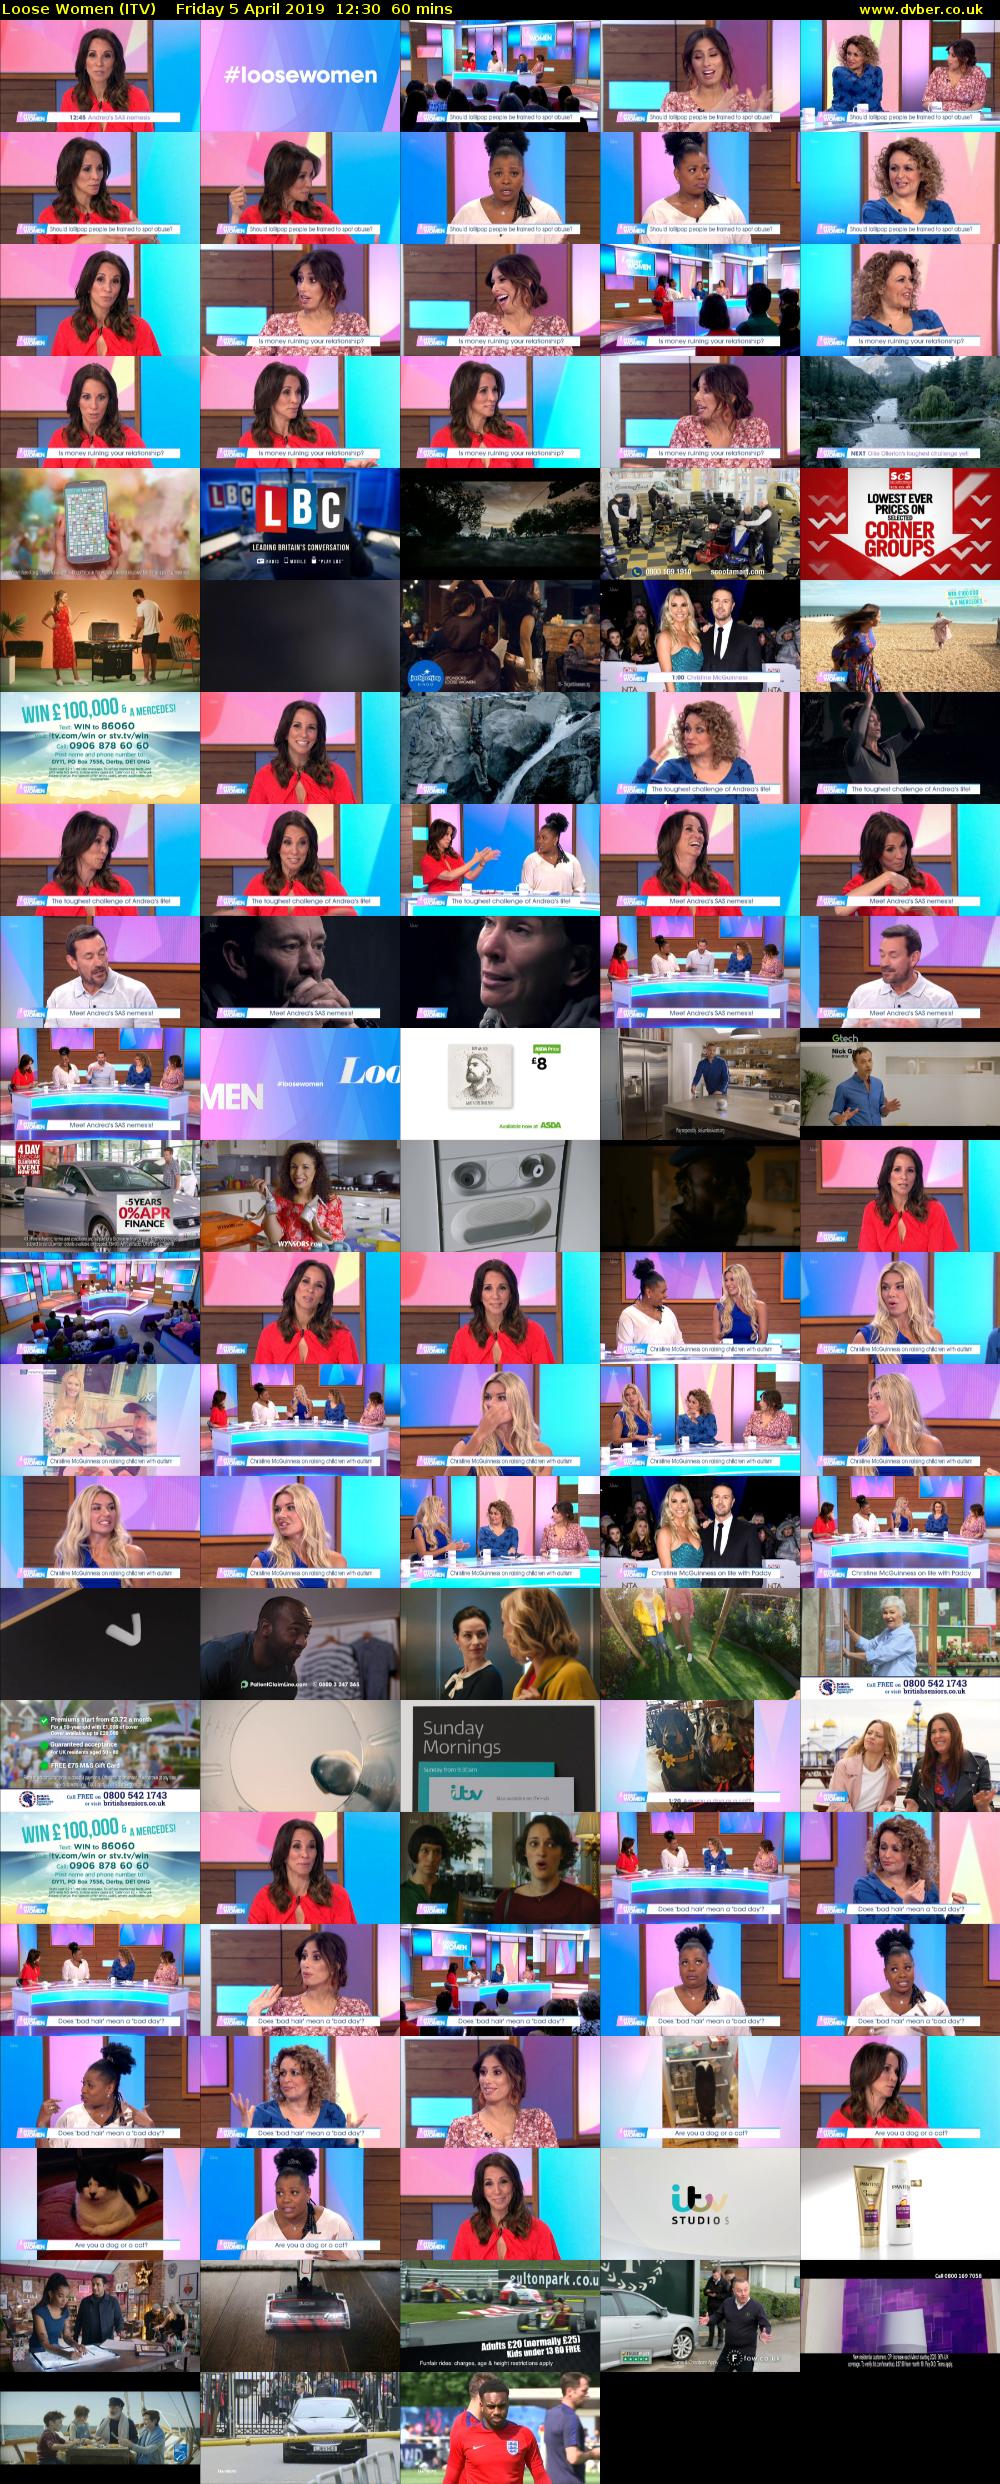 Loose Women (ITV) Friday 5 April 2019 12:30 - 13:30